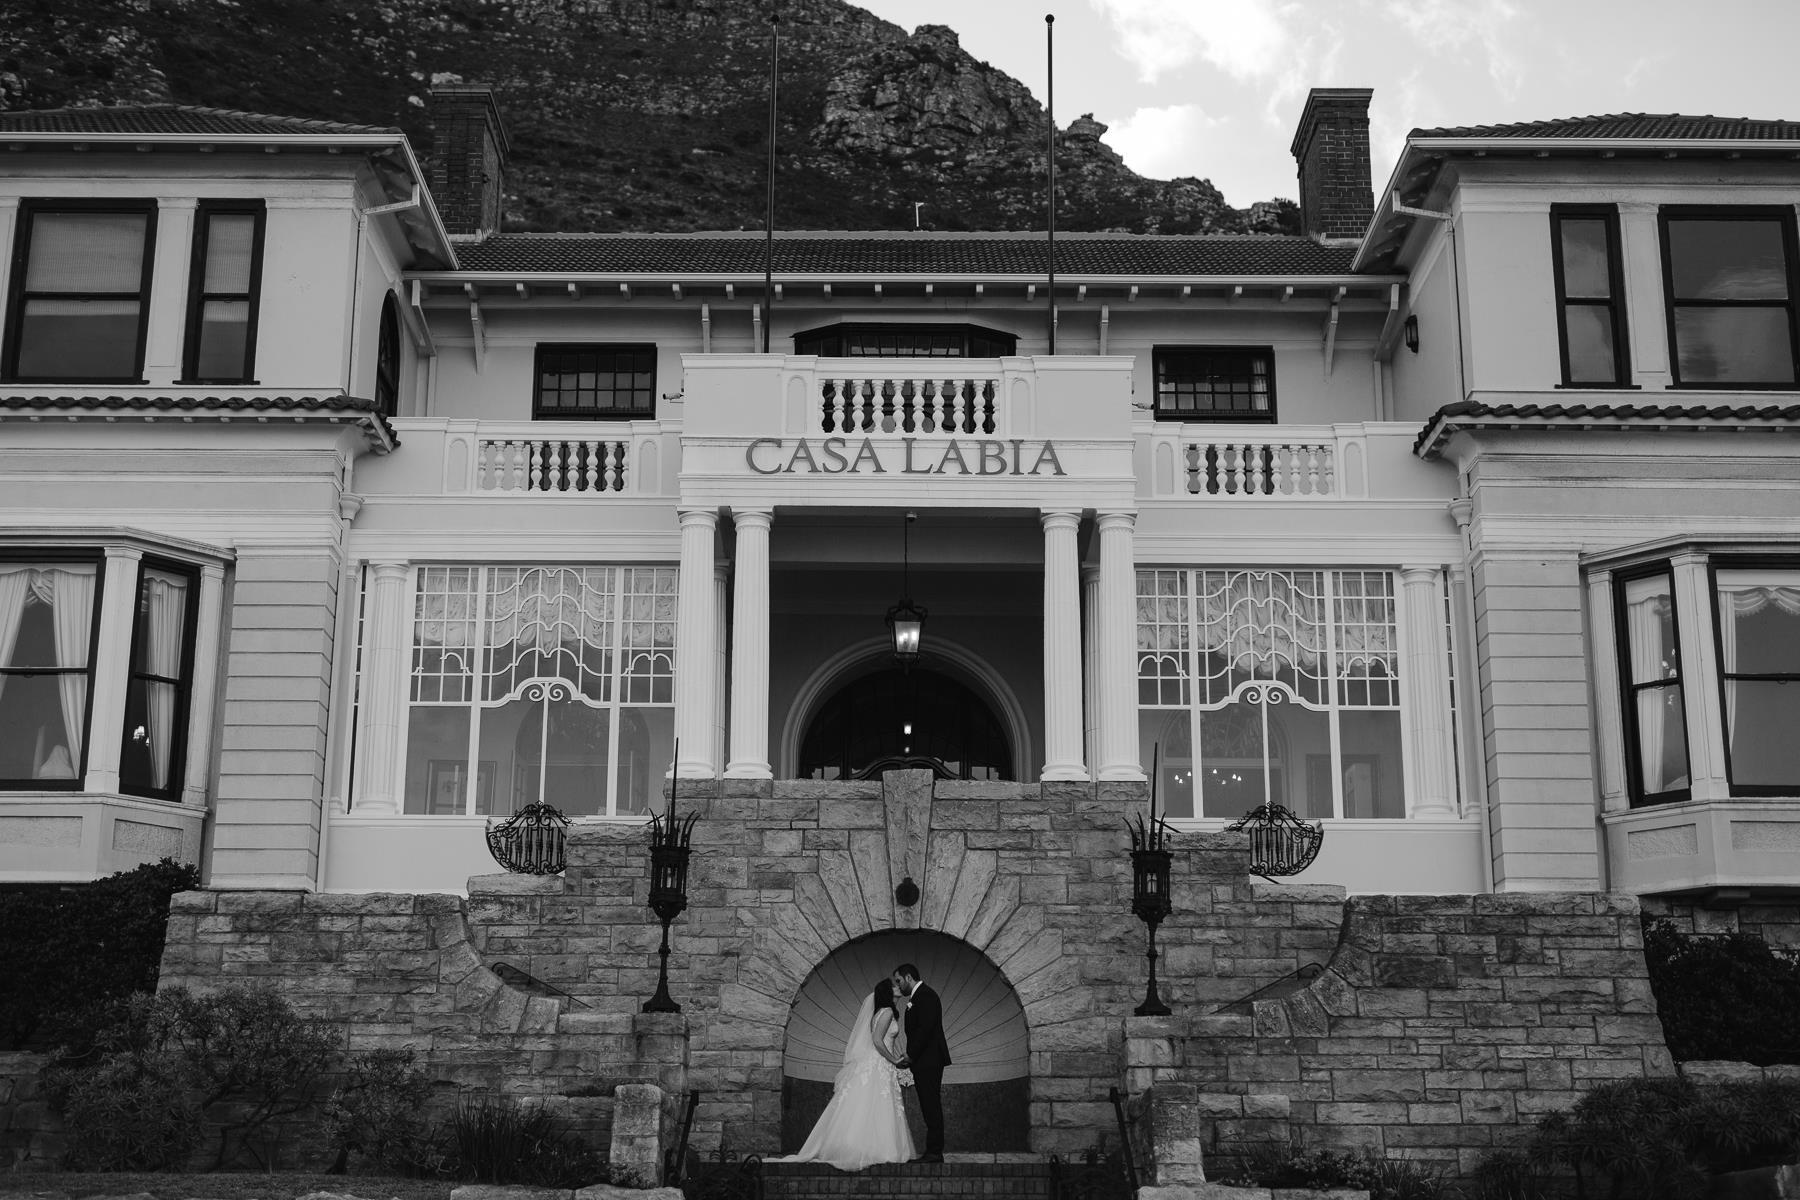 Casa Labia Cultural Centre